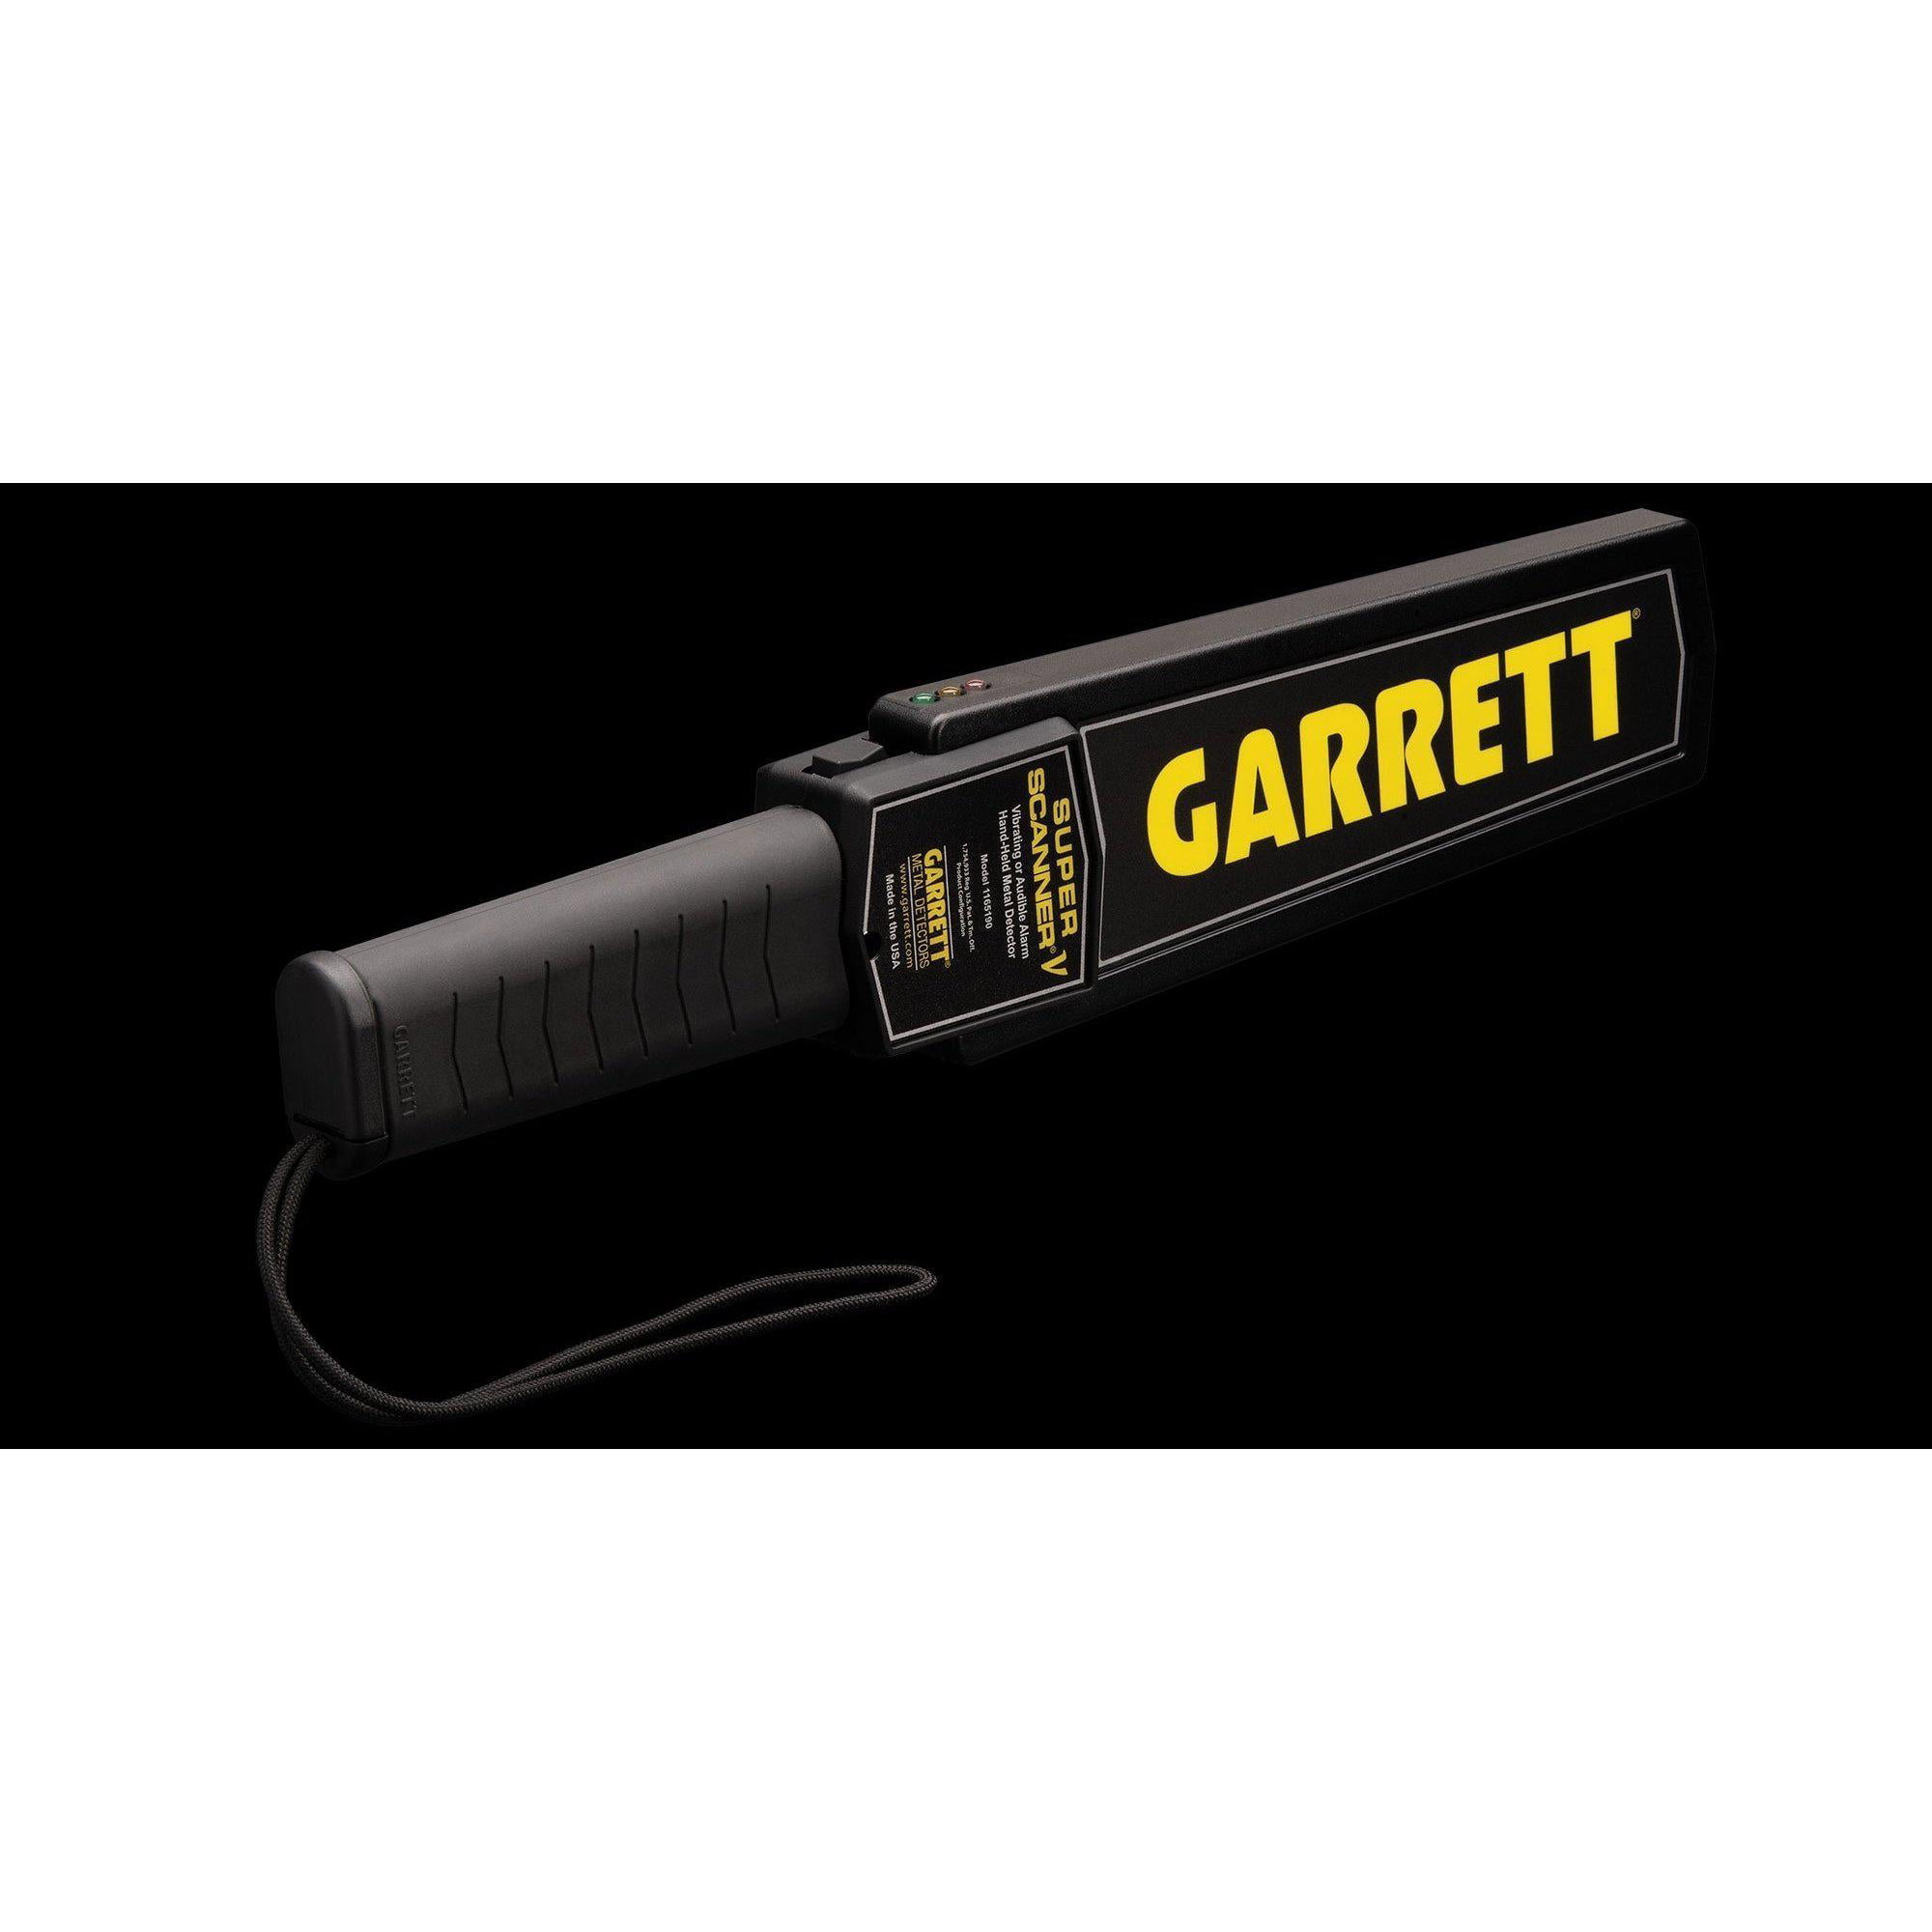 Garrett 1165180 Super Scanner Metal Detector for sale online 